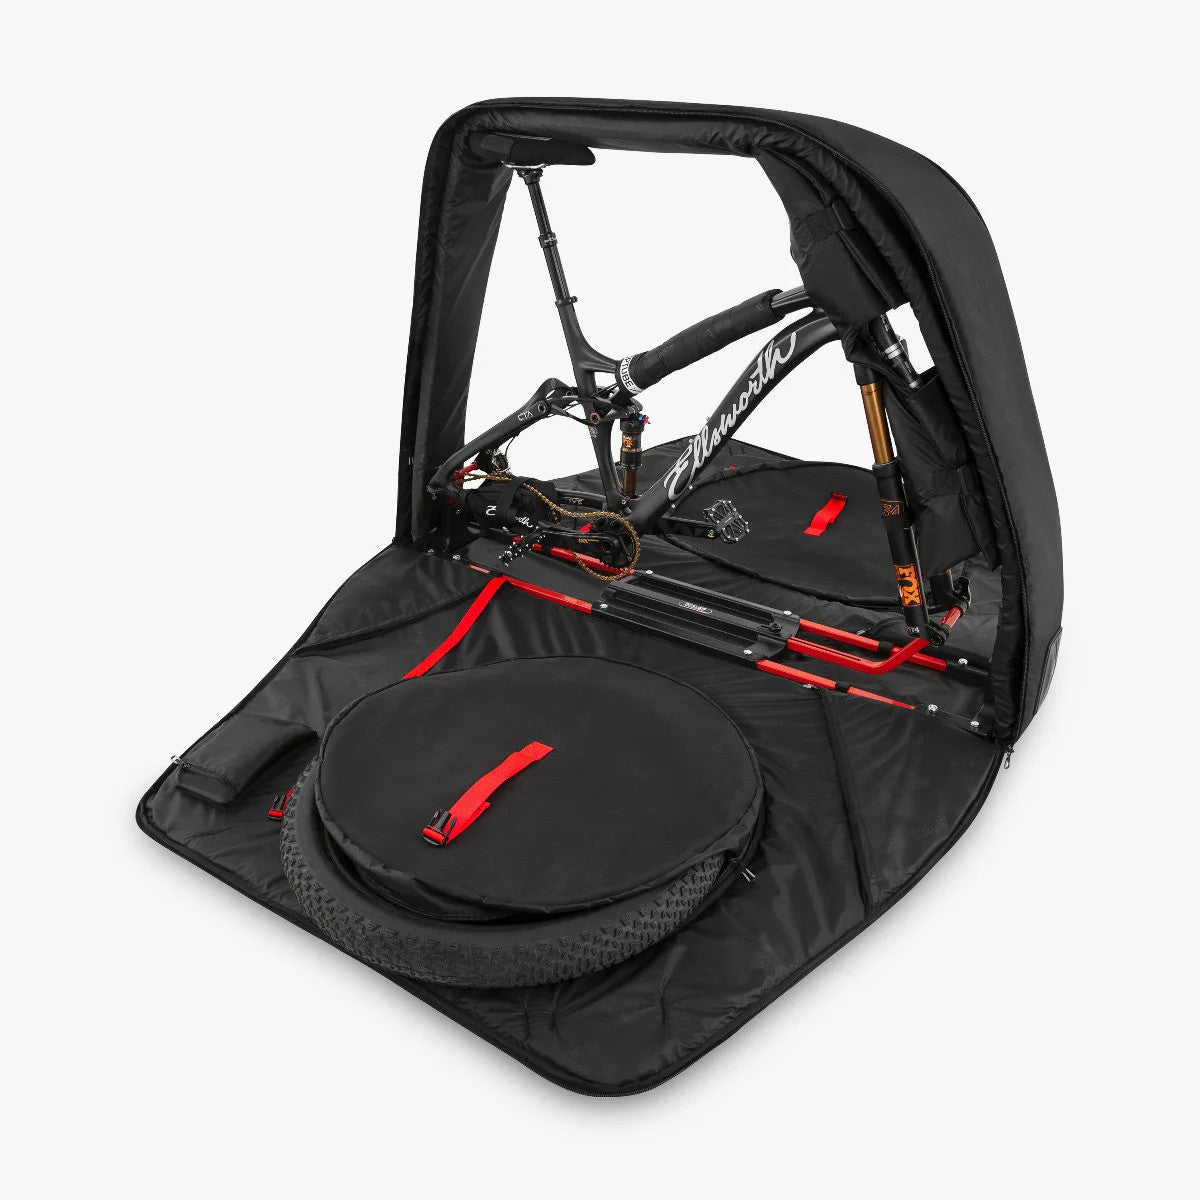 Scicon AeroComfort MTB Travel Bag for Mountain Bikes